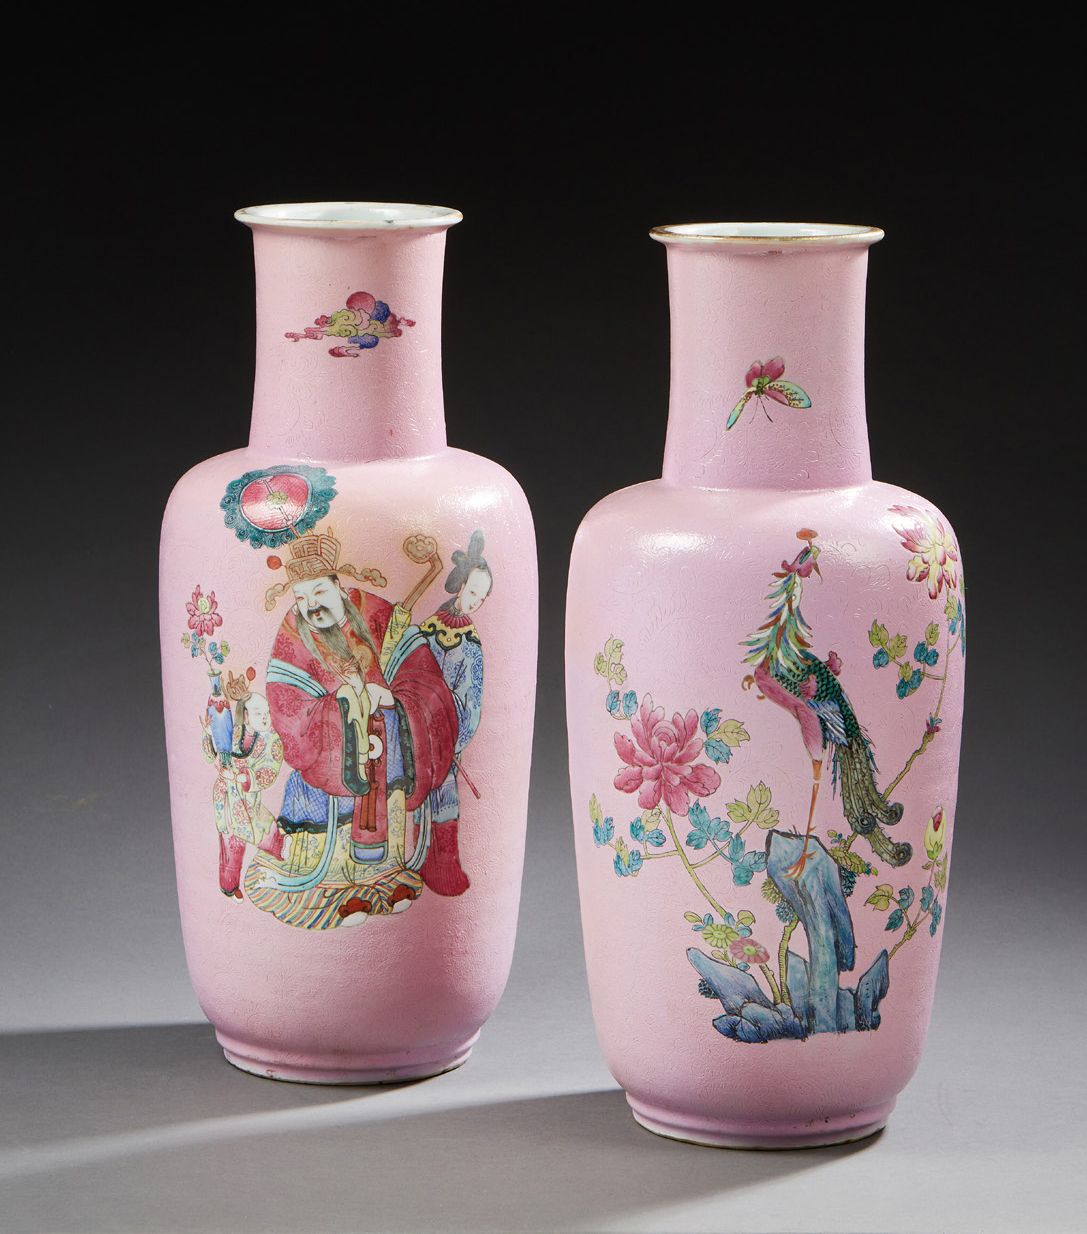 CHINE 一对粉红色背景刻花的窄颈圆柱形瓷瓶。它们都是用粉彩装饰的，上面有一个手持权杖的贵族，周围有他的妻子和孩子，还有栖息在岩石上的凤凰，周围有鲜花和蝴蝶。&hellip;